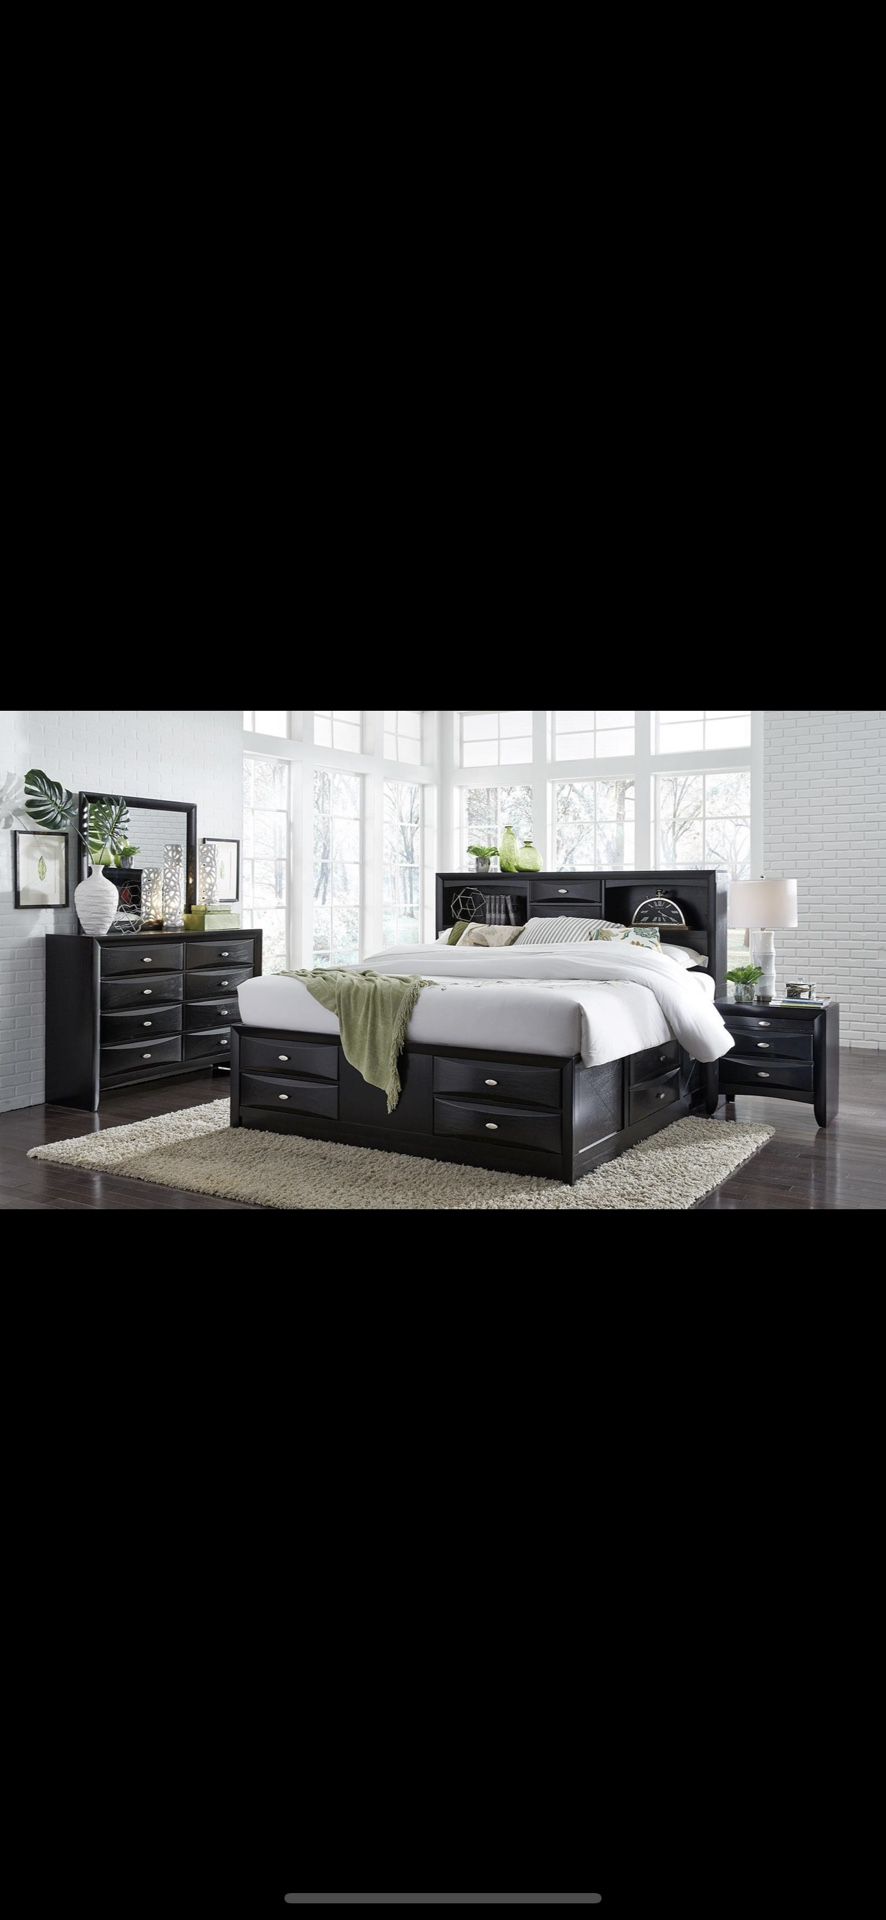 Brand New Complete Bedroom Set for $1399!!!